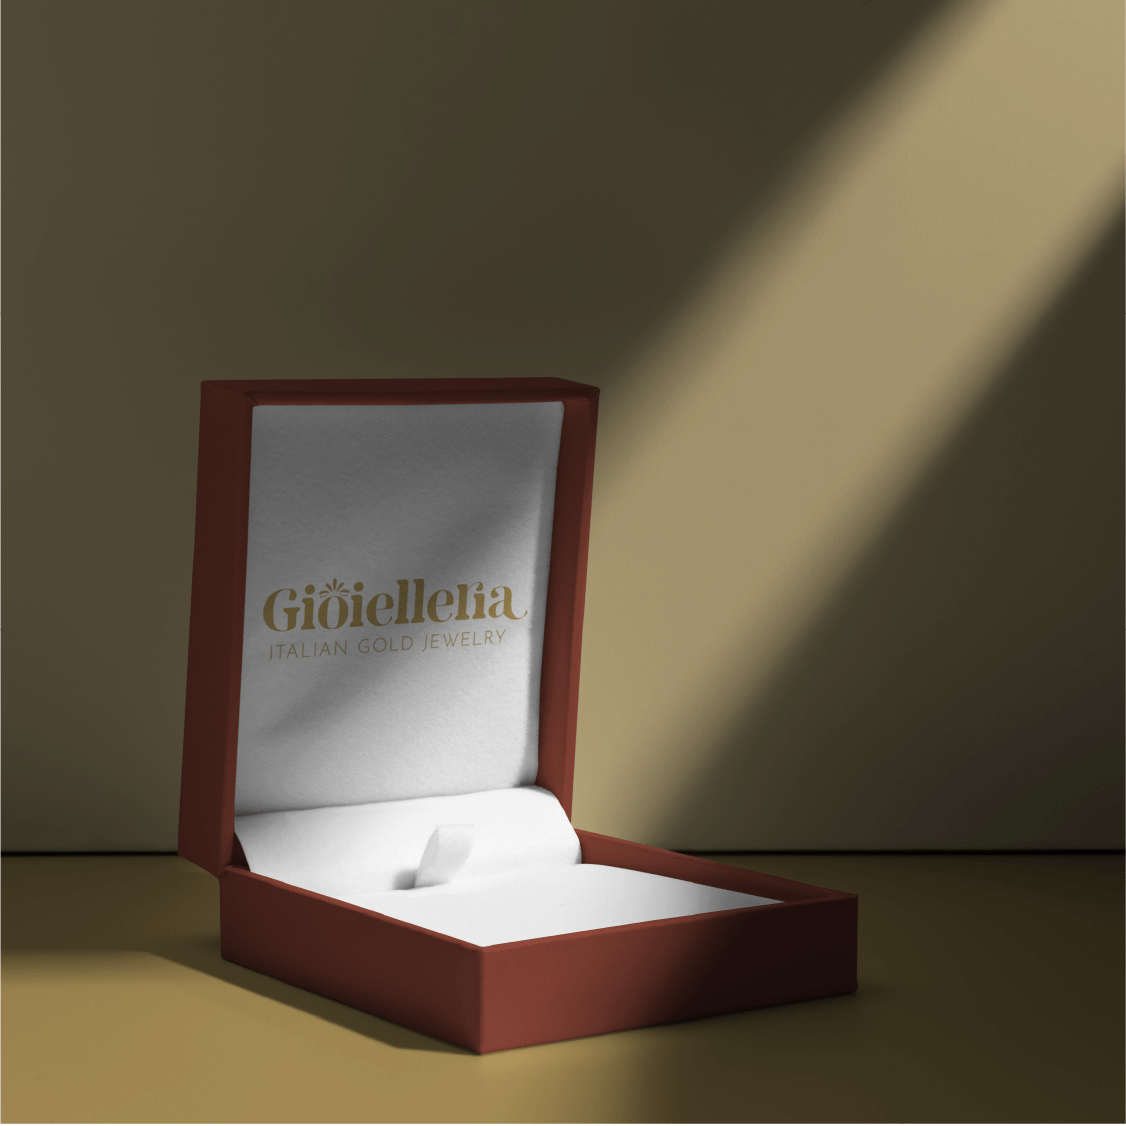 Mockup - Boite à bijoux avec logo de marque Gioielleria - Sarah La Selva